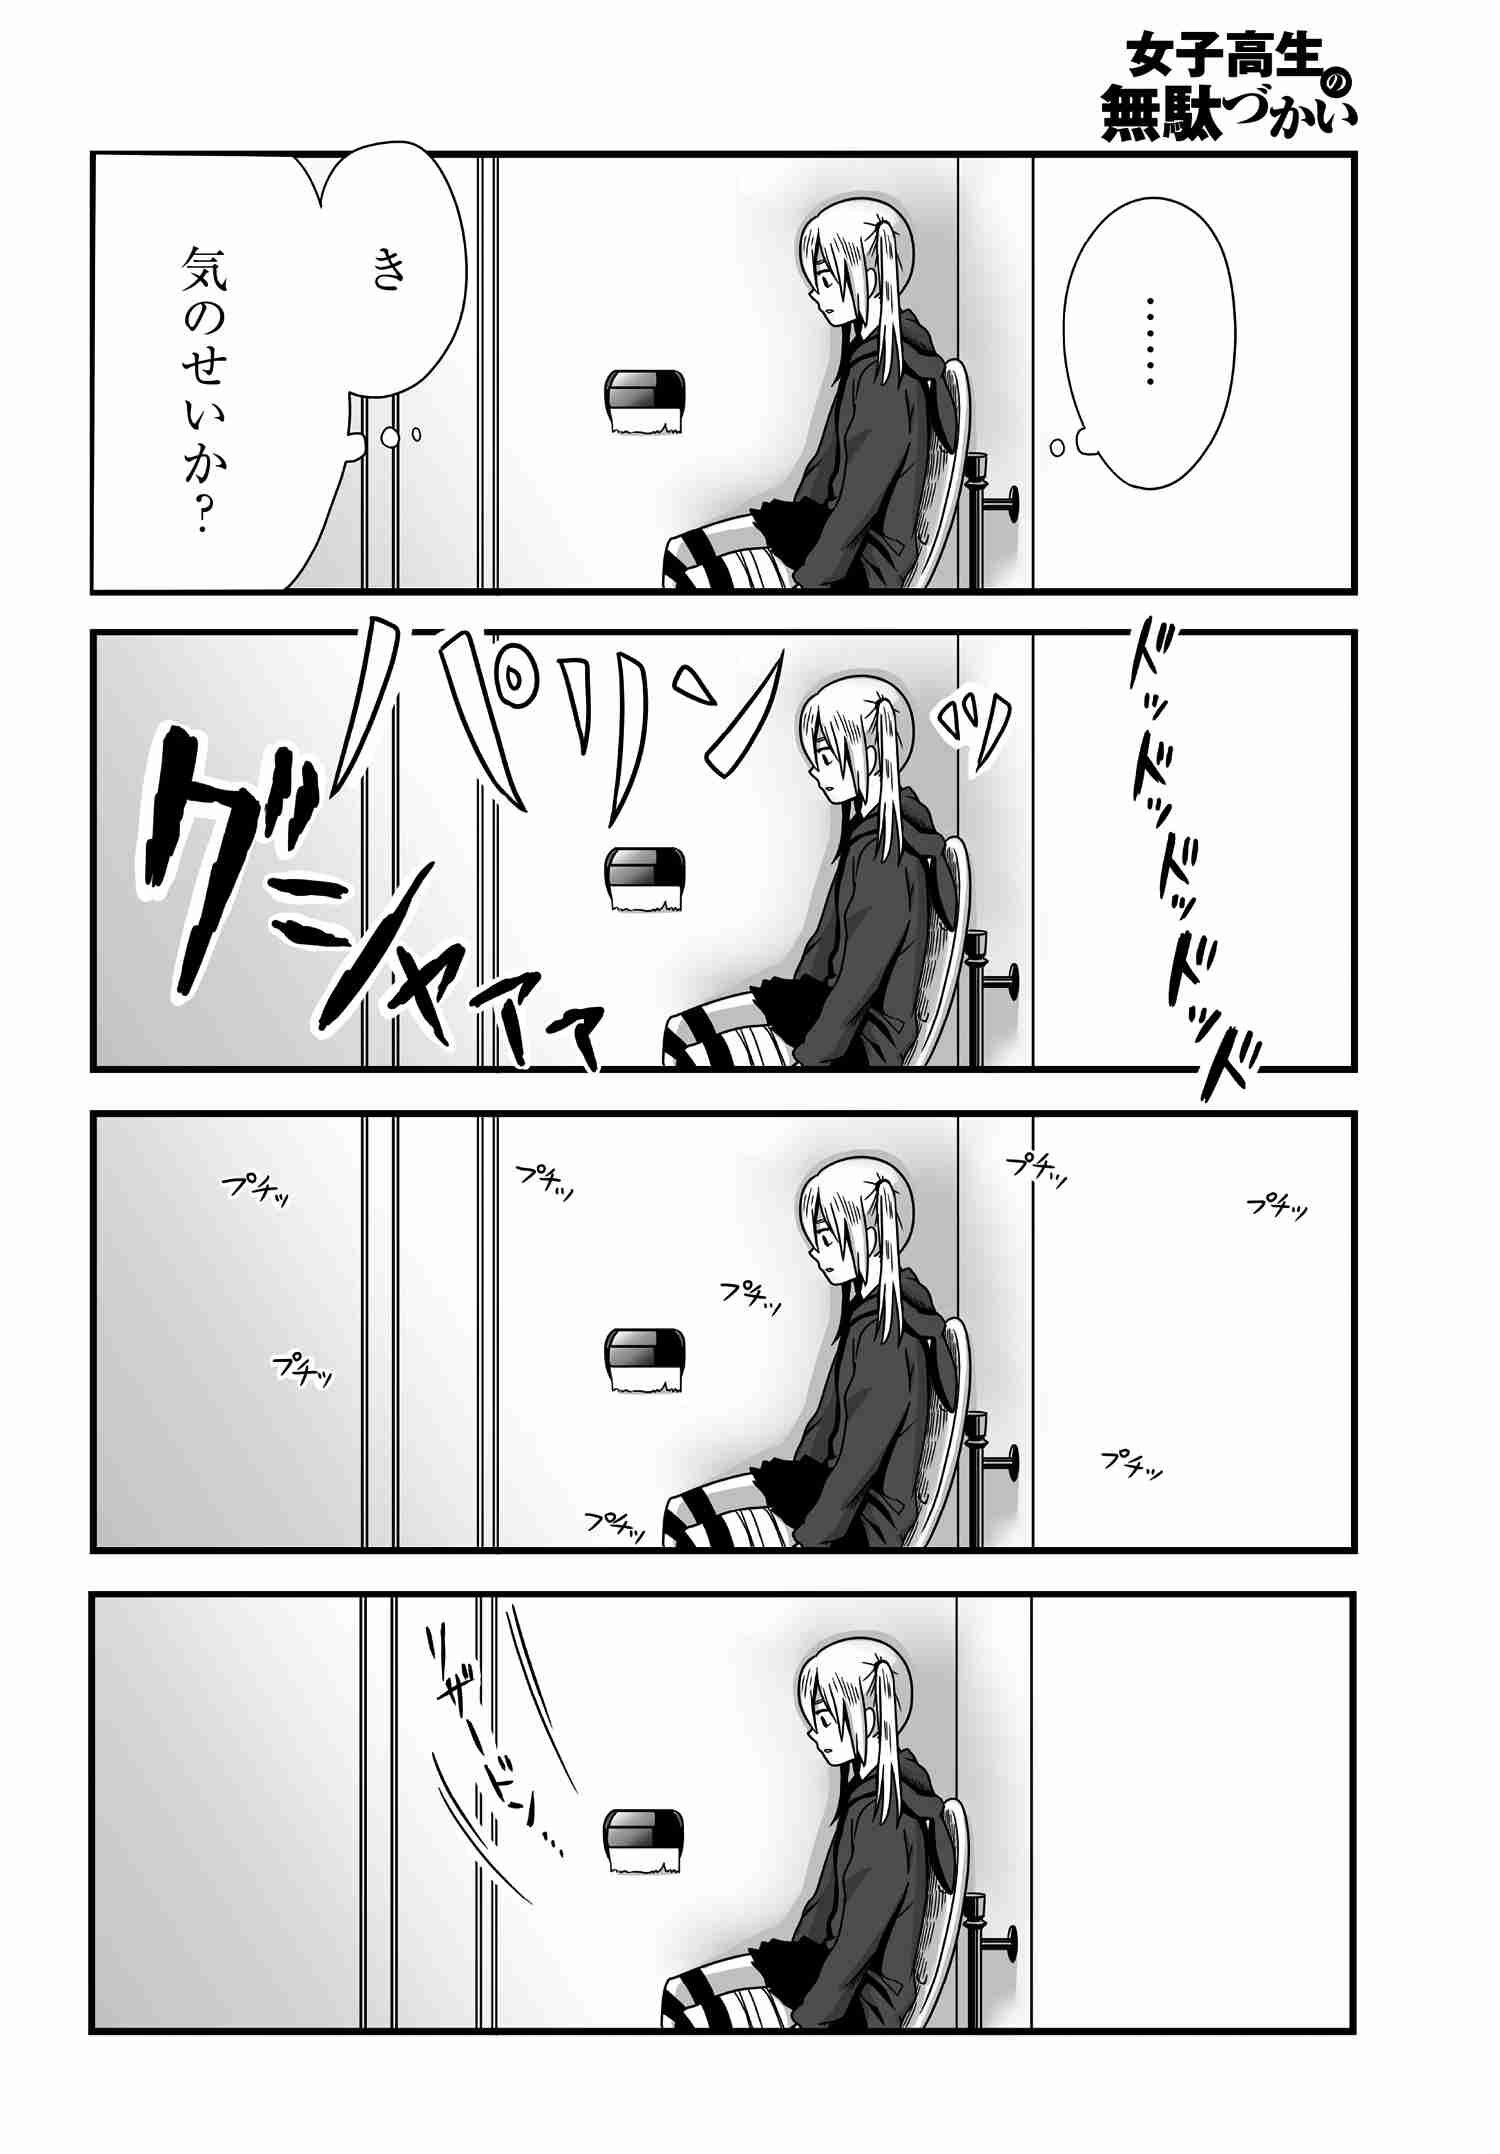 Joshikousei no Mudazukai - Chapter 007 - Page 2